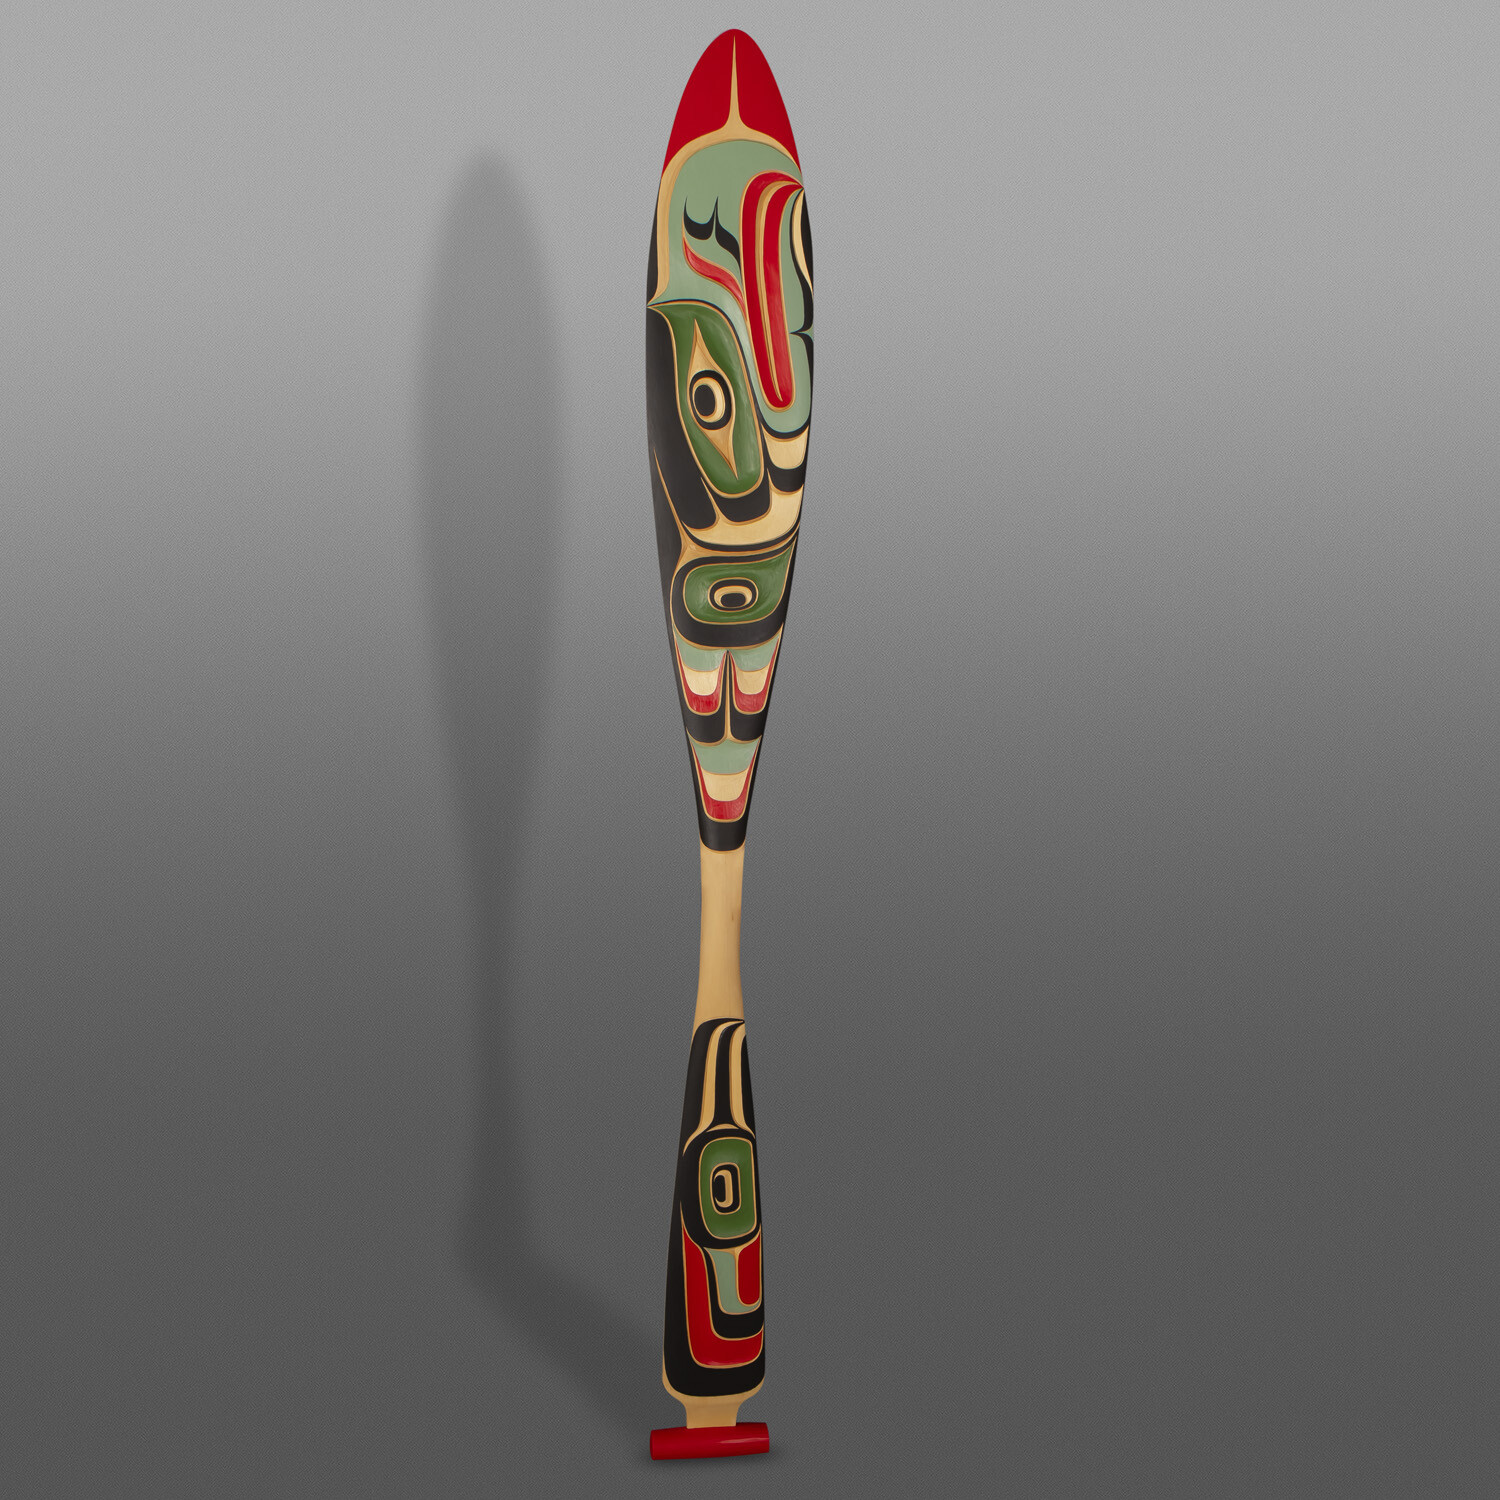 Eagle Paddle
Raymond Shaw
Kwakwaka'wakw
Yellow cedar, paint
68" x 8" x 2"
$3400